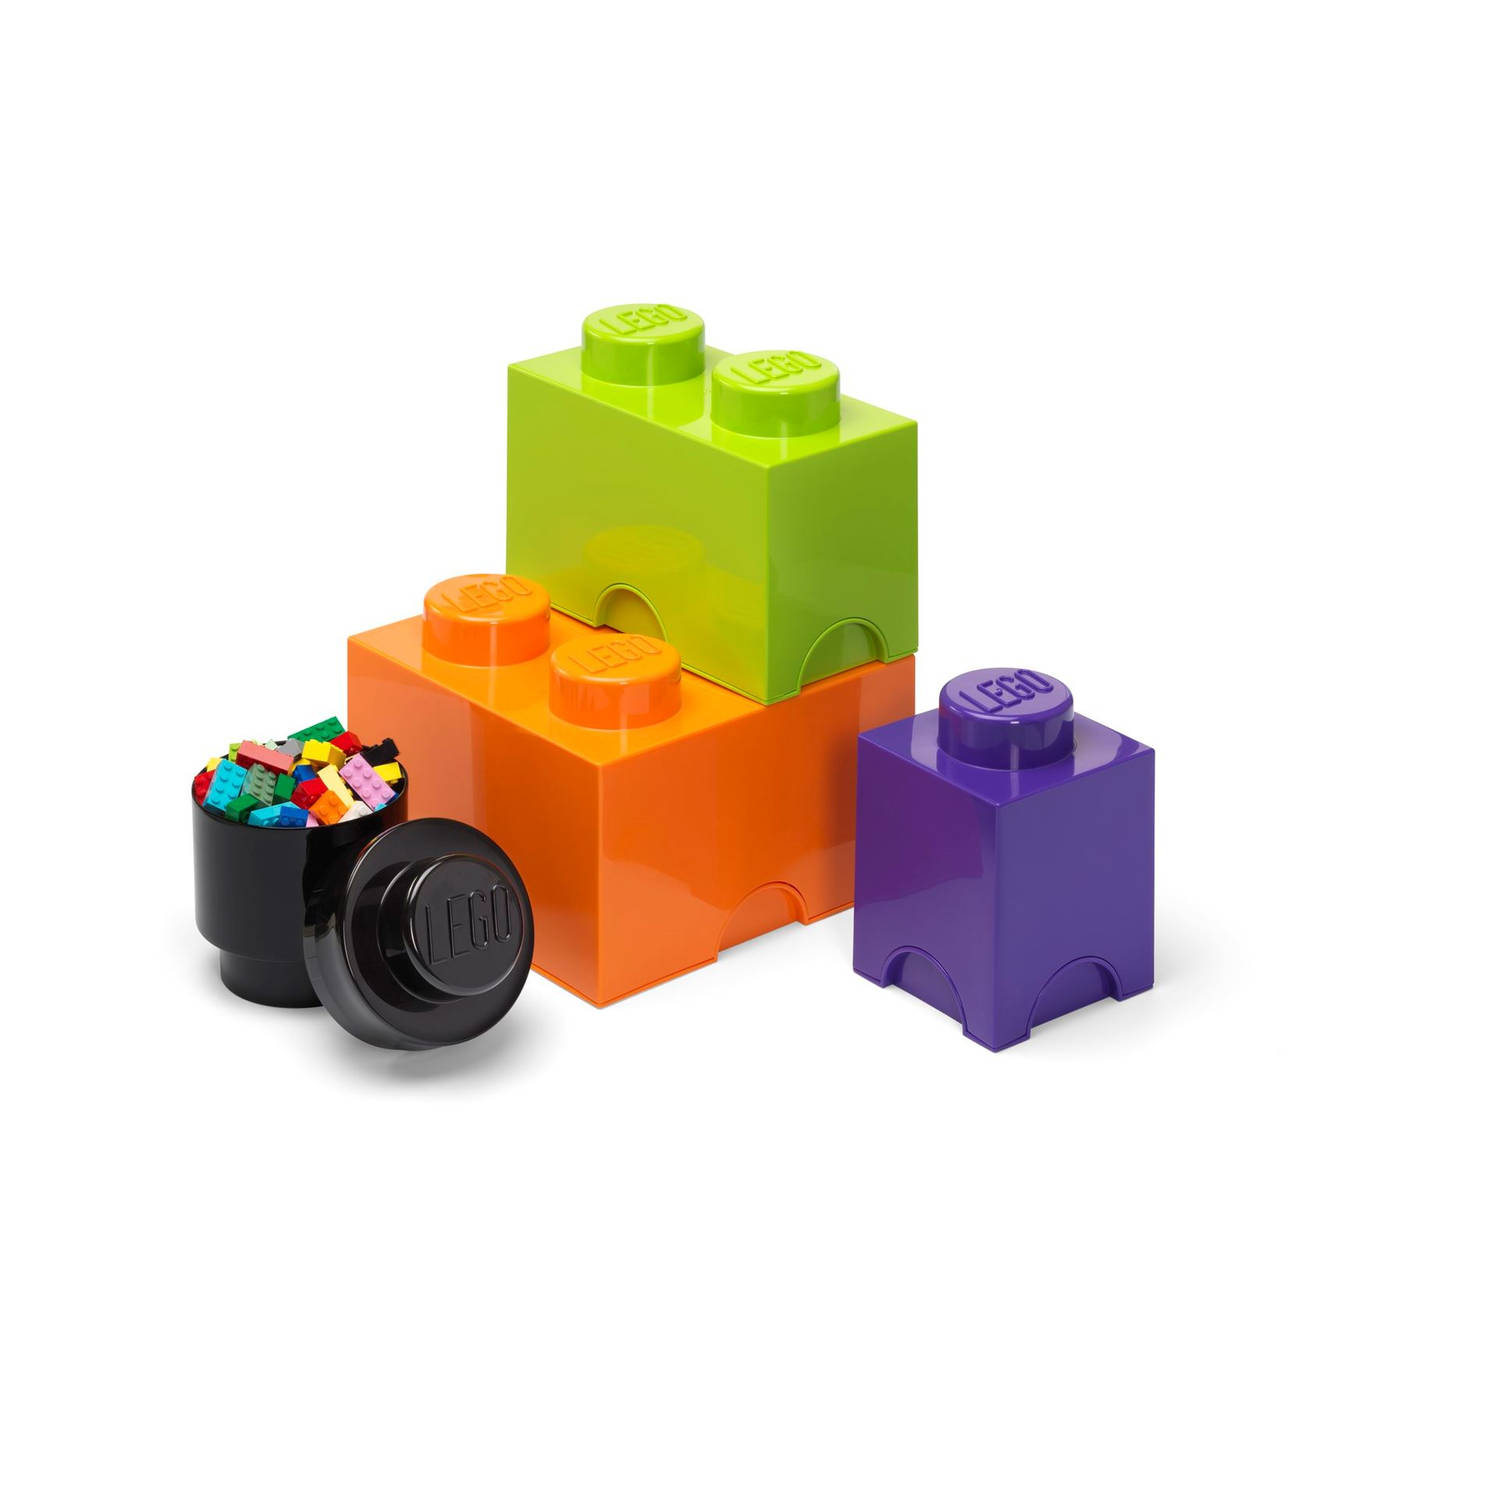 Lego - Storage Brick Multi-Pack Large Halloween